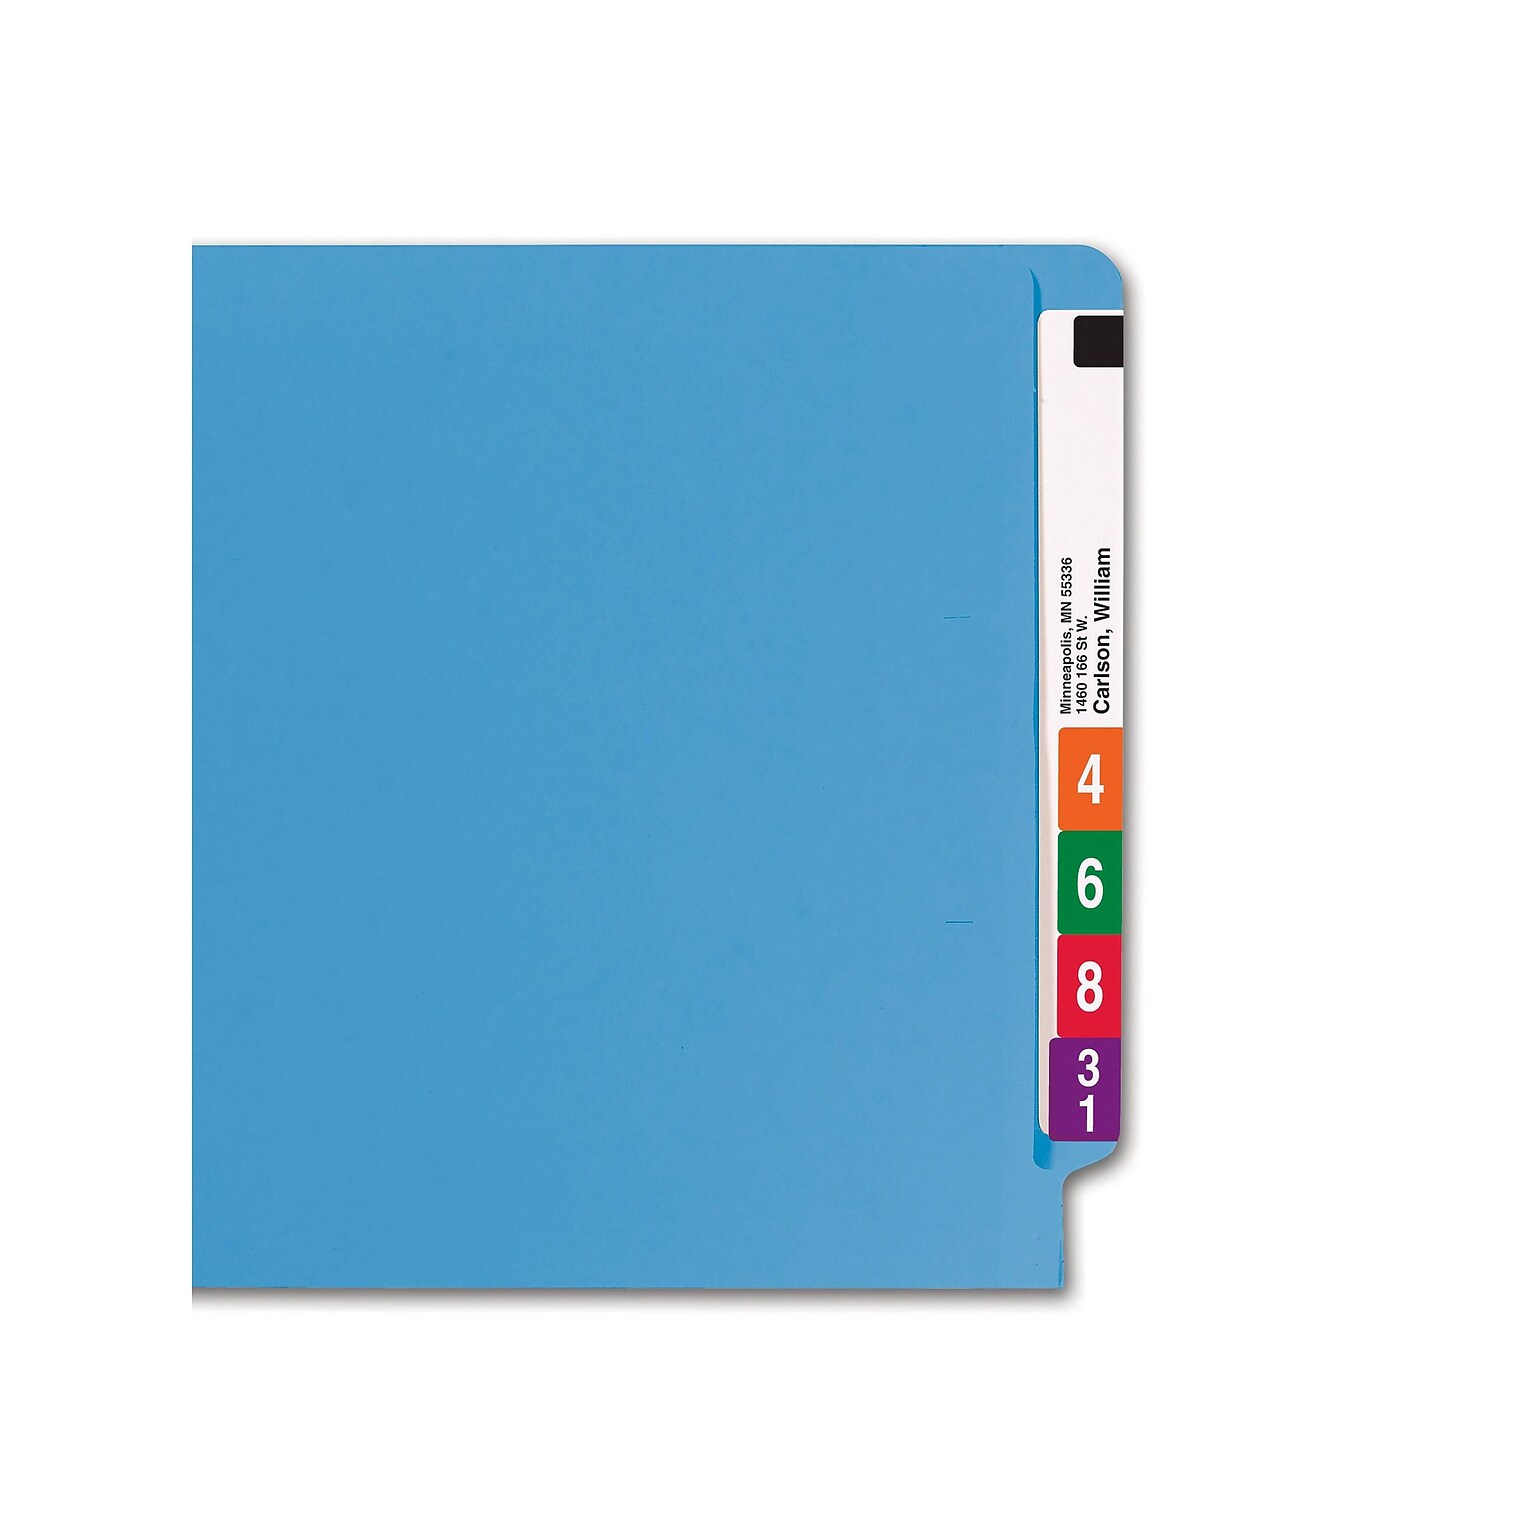 Smead End-Tab File Folders, Shelf-Master Reinforced Straight-Cut Tab, Letter Size, Blue, 100/Box (25010)